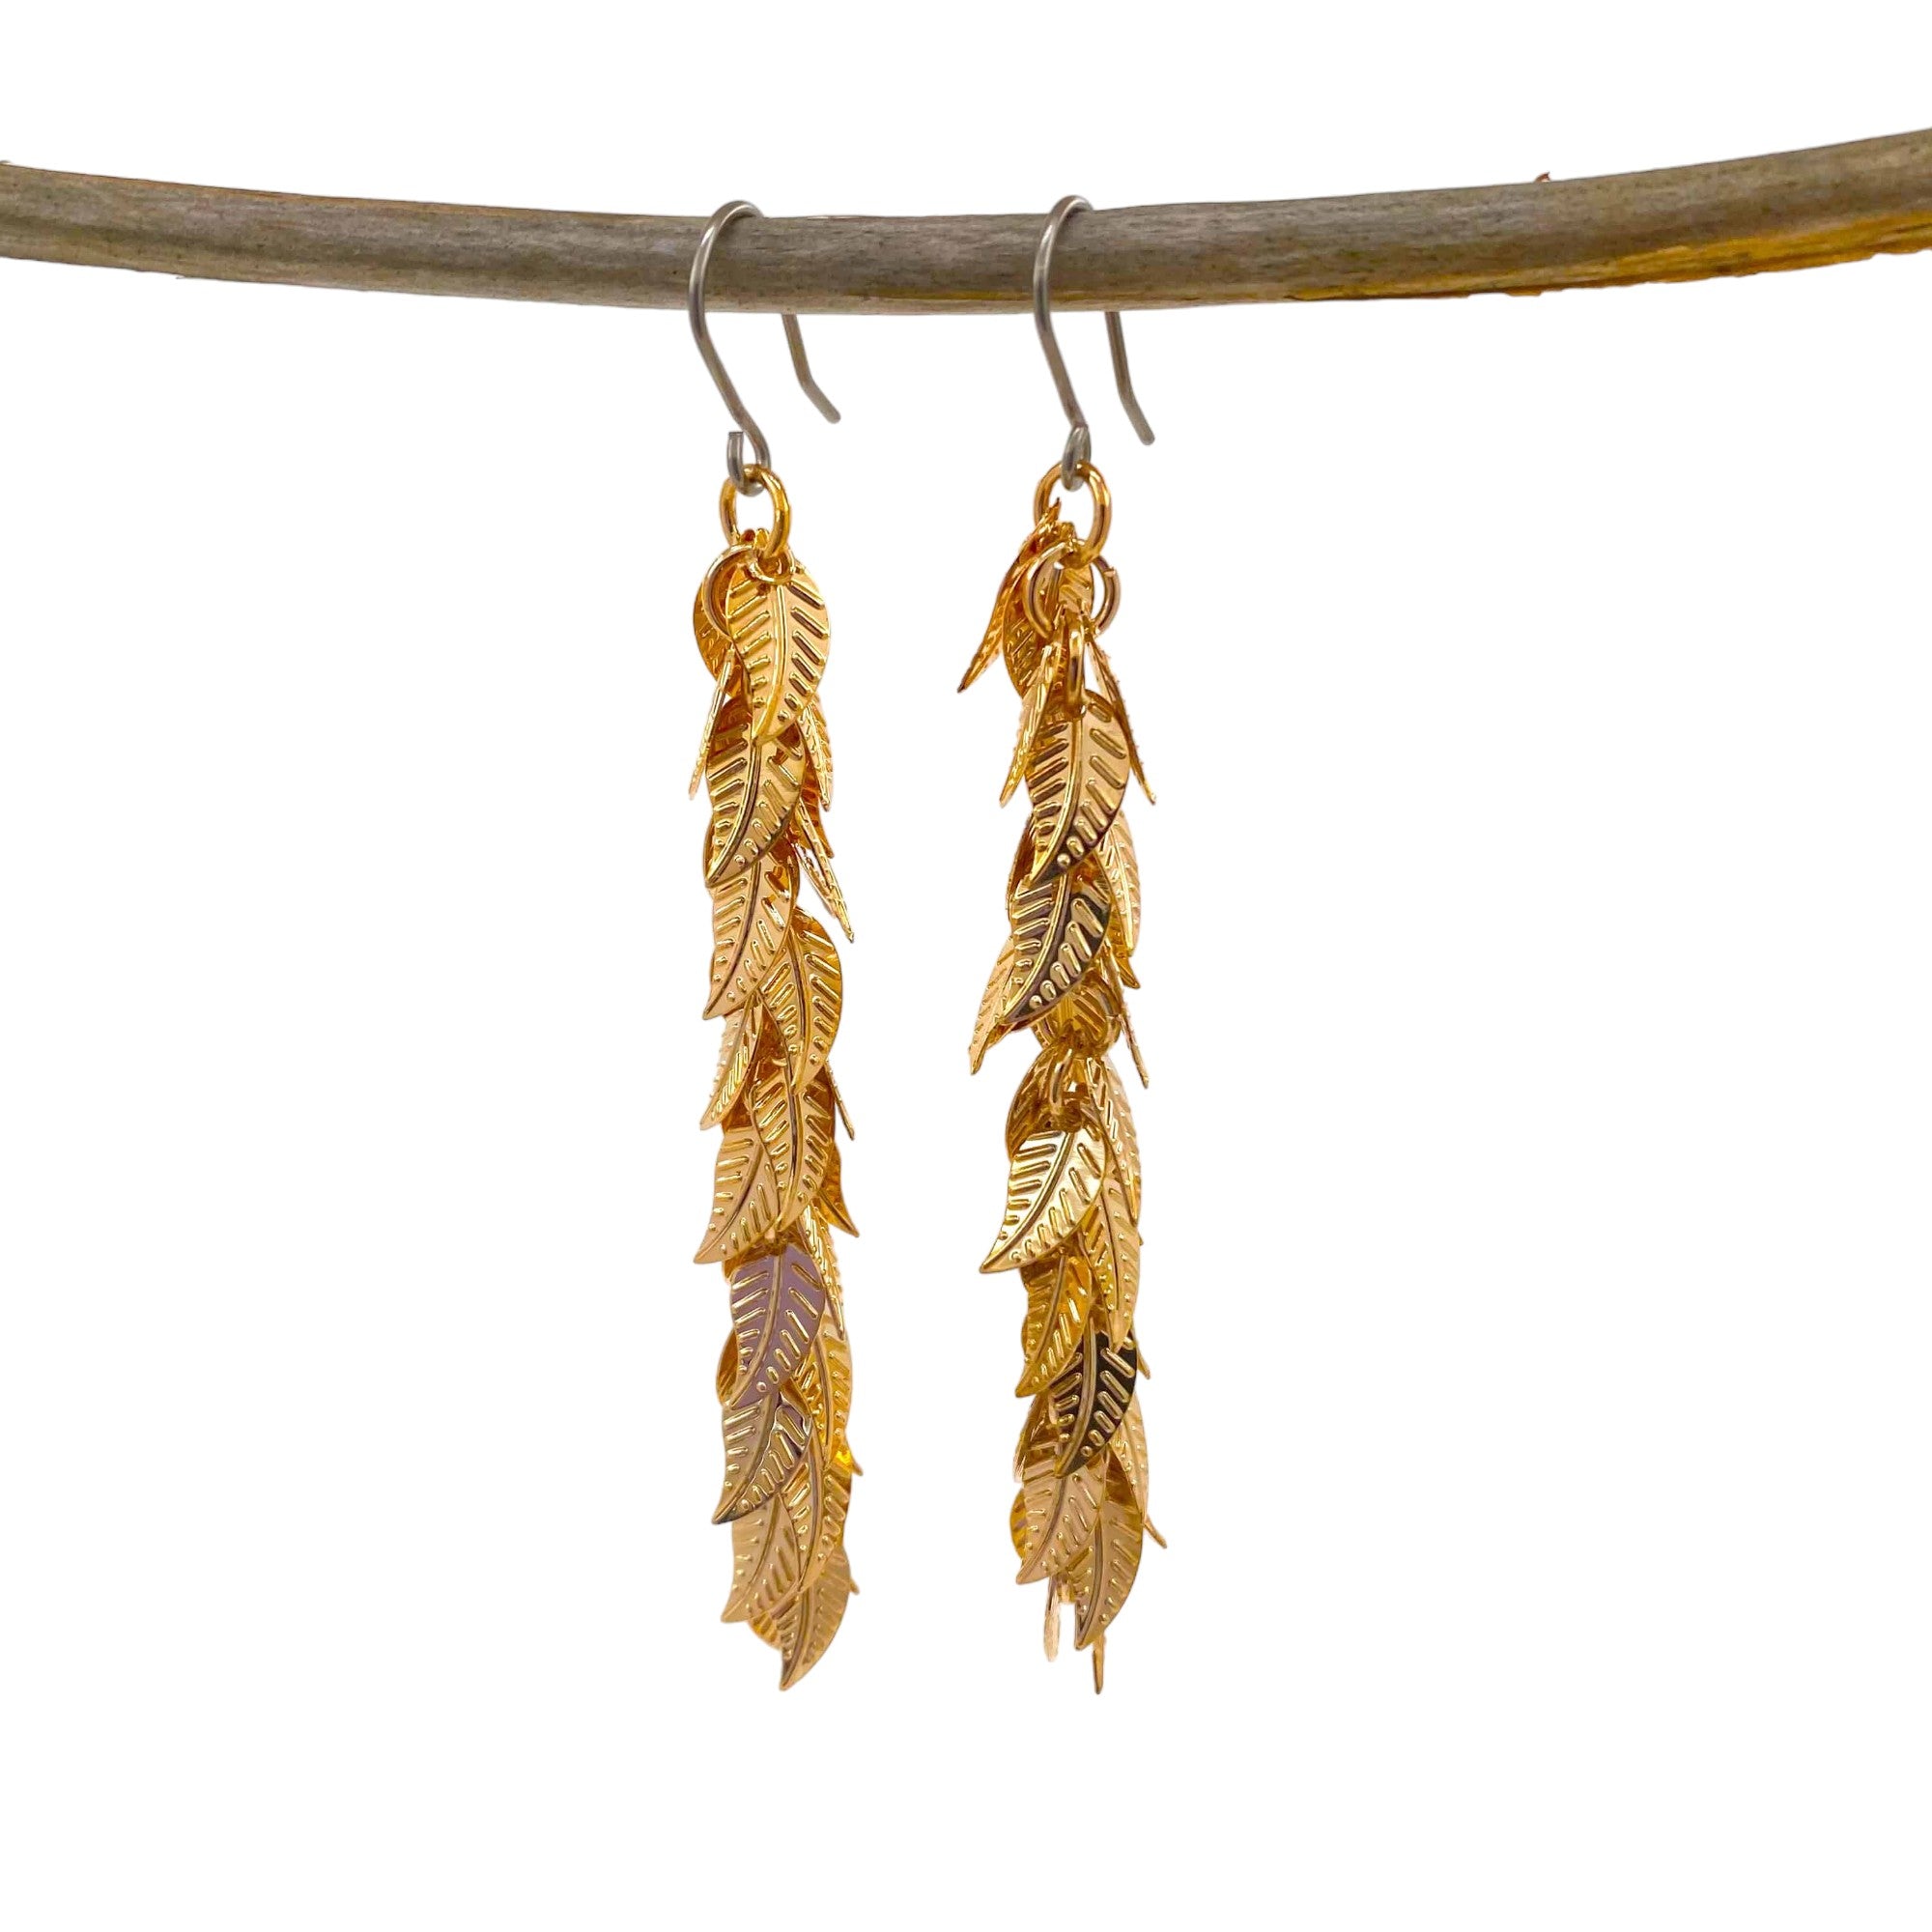 Gold leaves earrings